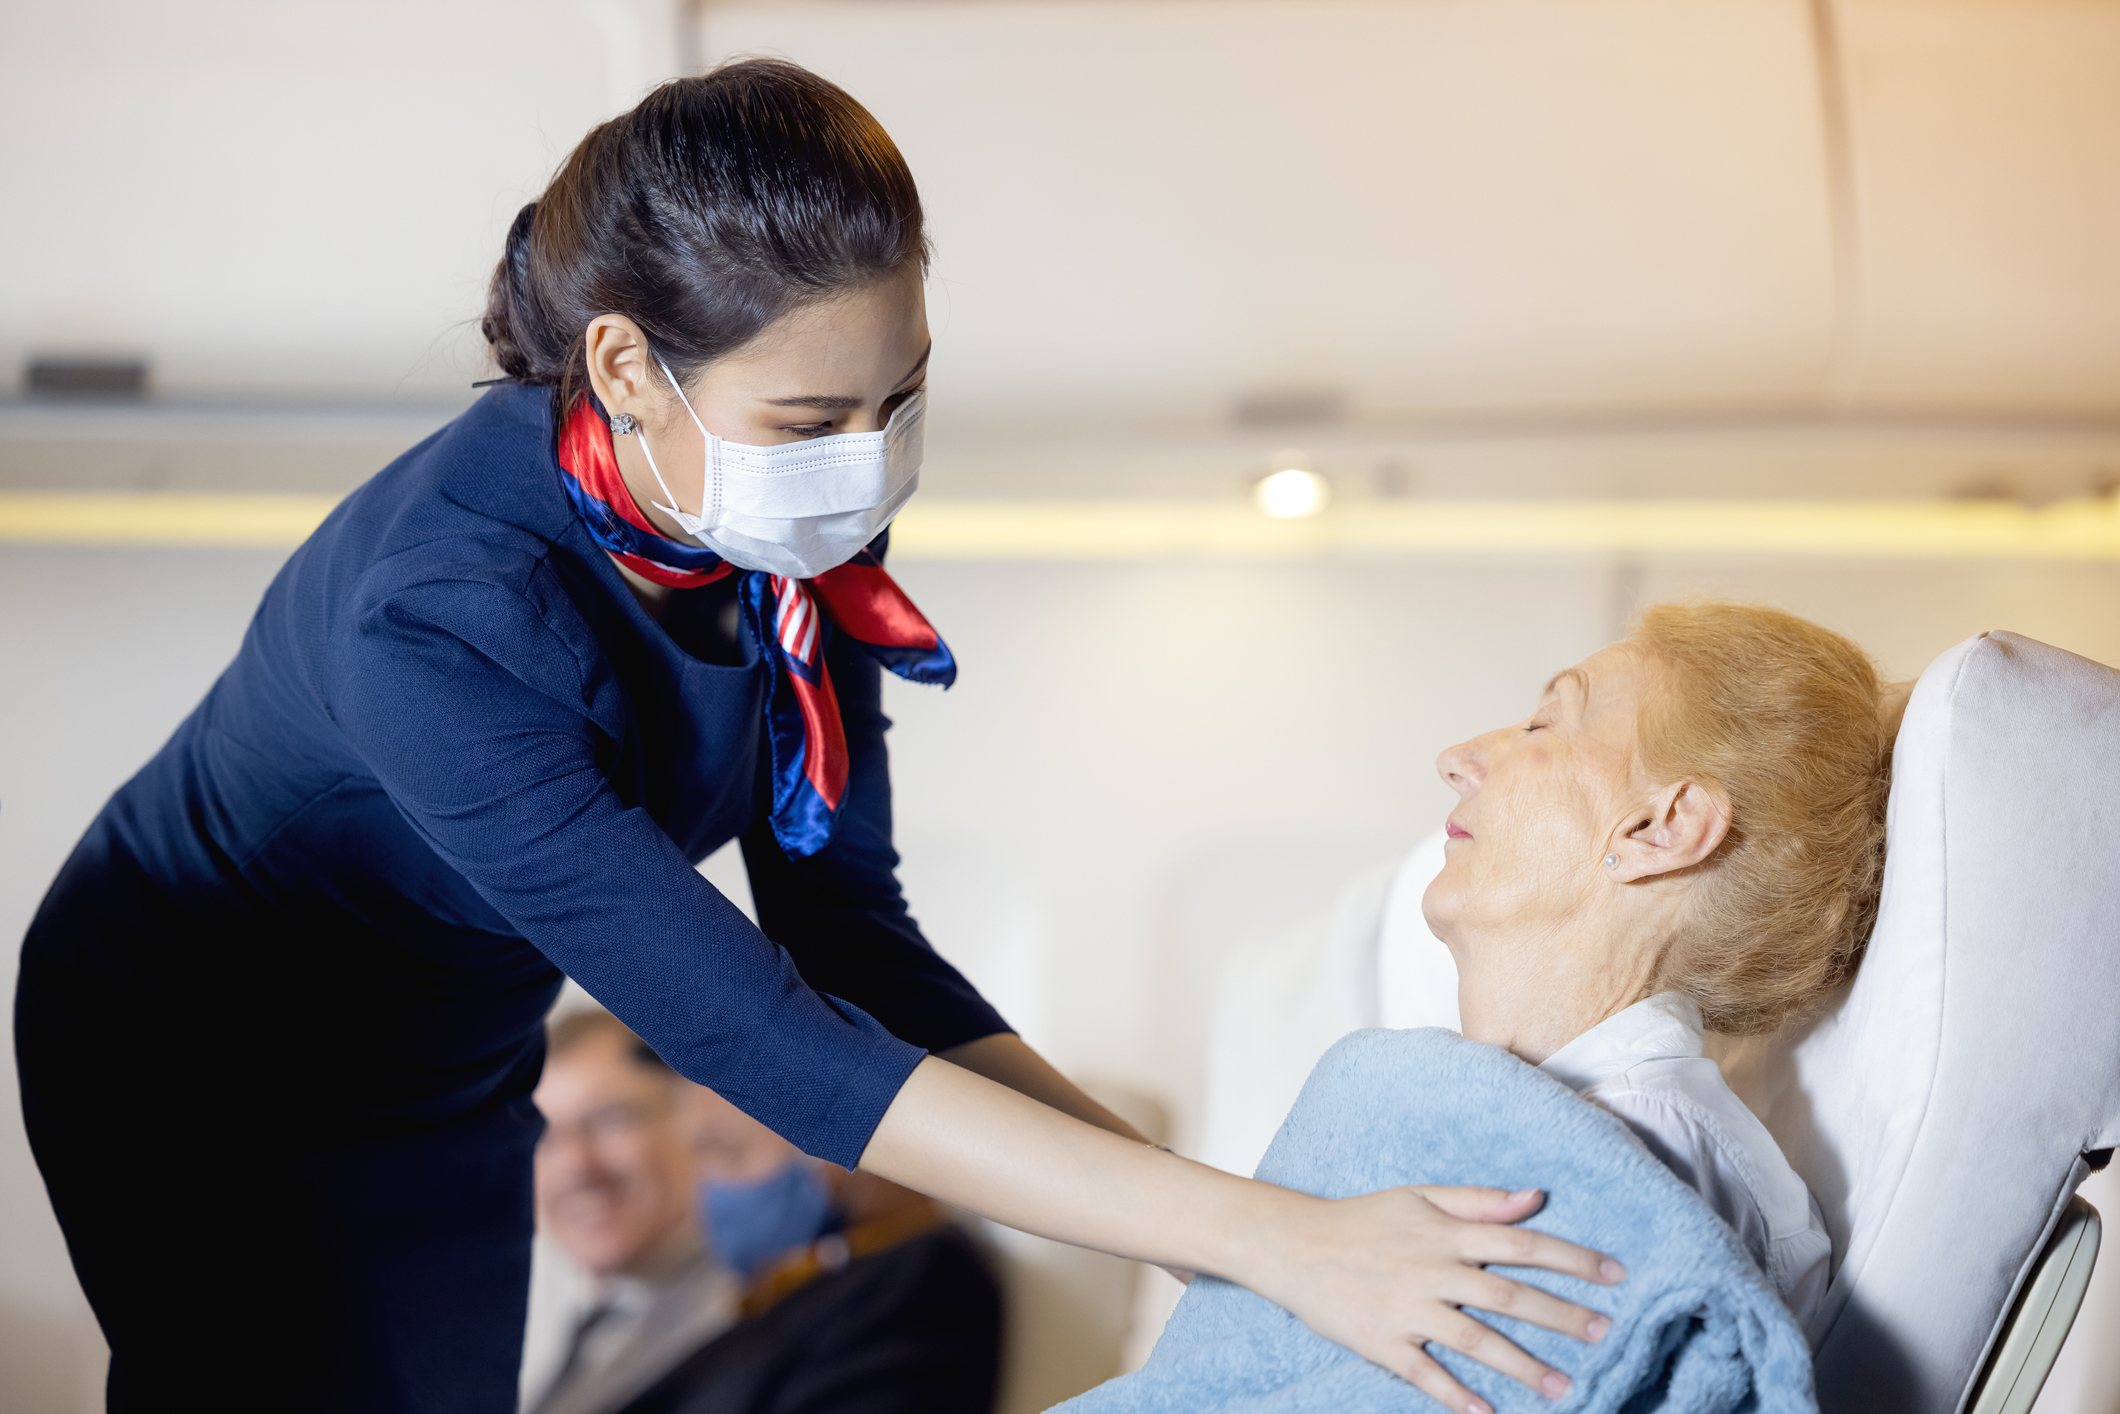 A female flight attendant clothed an elderly passenger